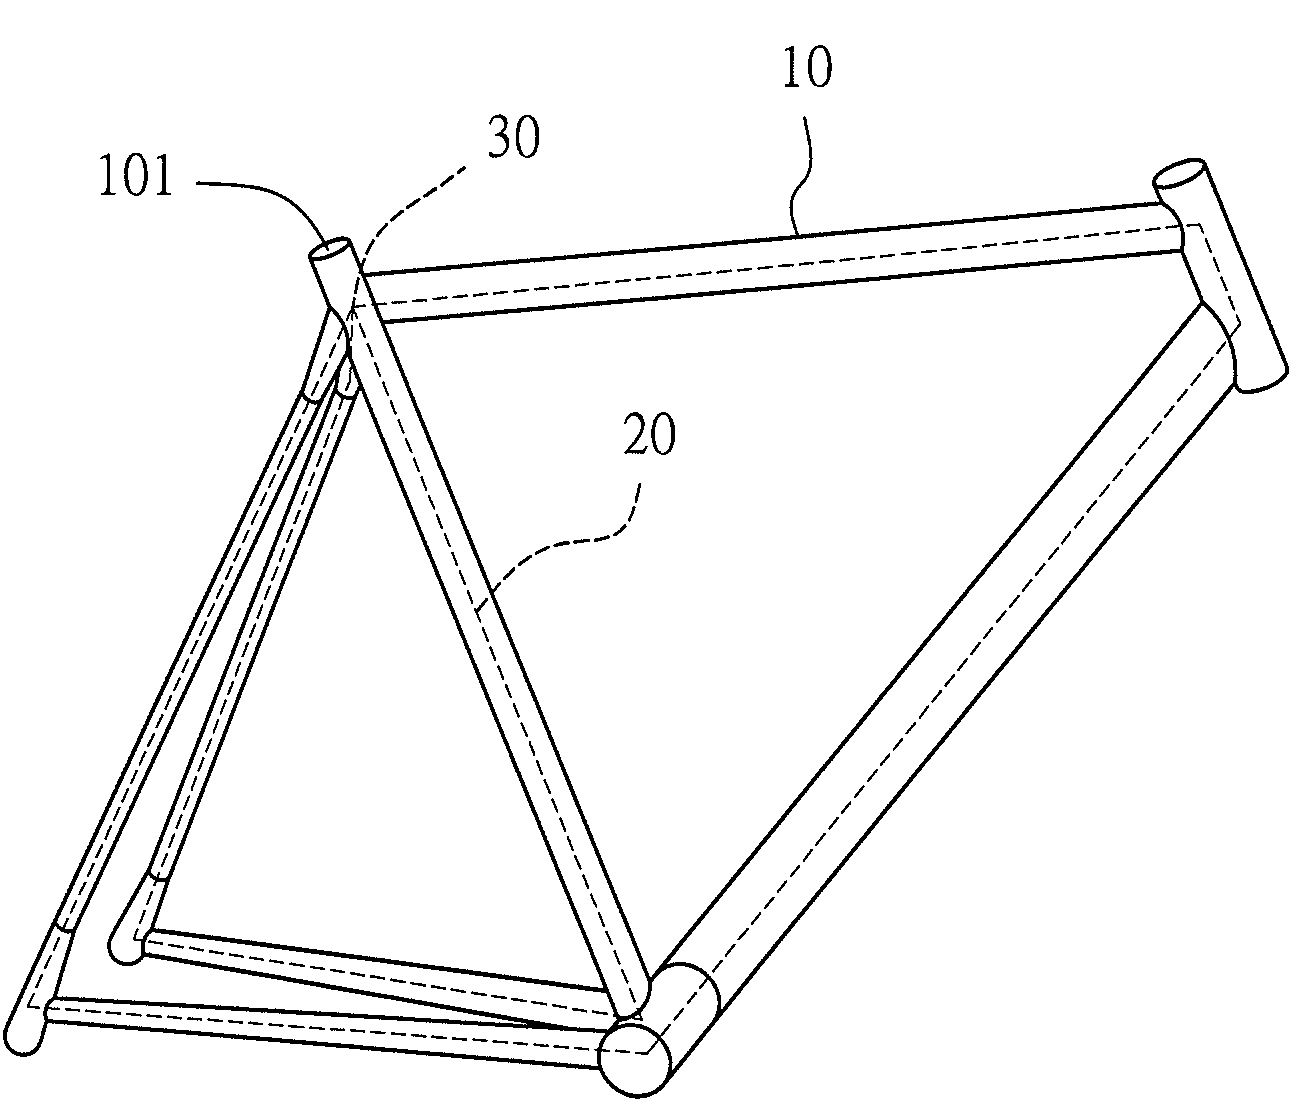 Method for detecting cracks in carbon fiber bicycle frame using embedded optical fiber